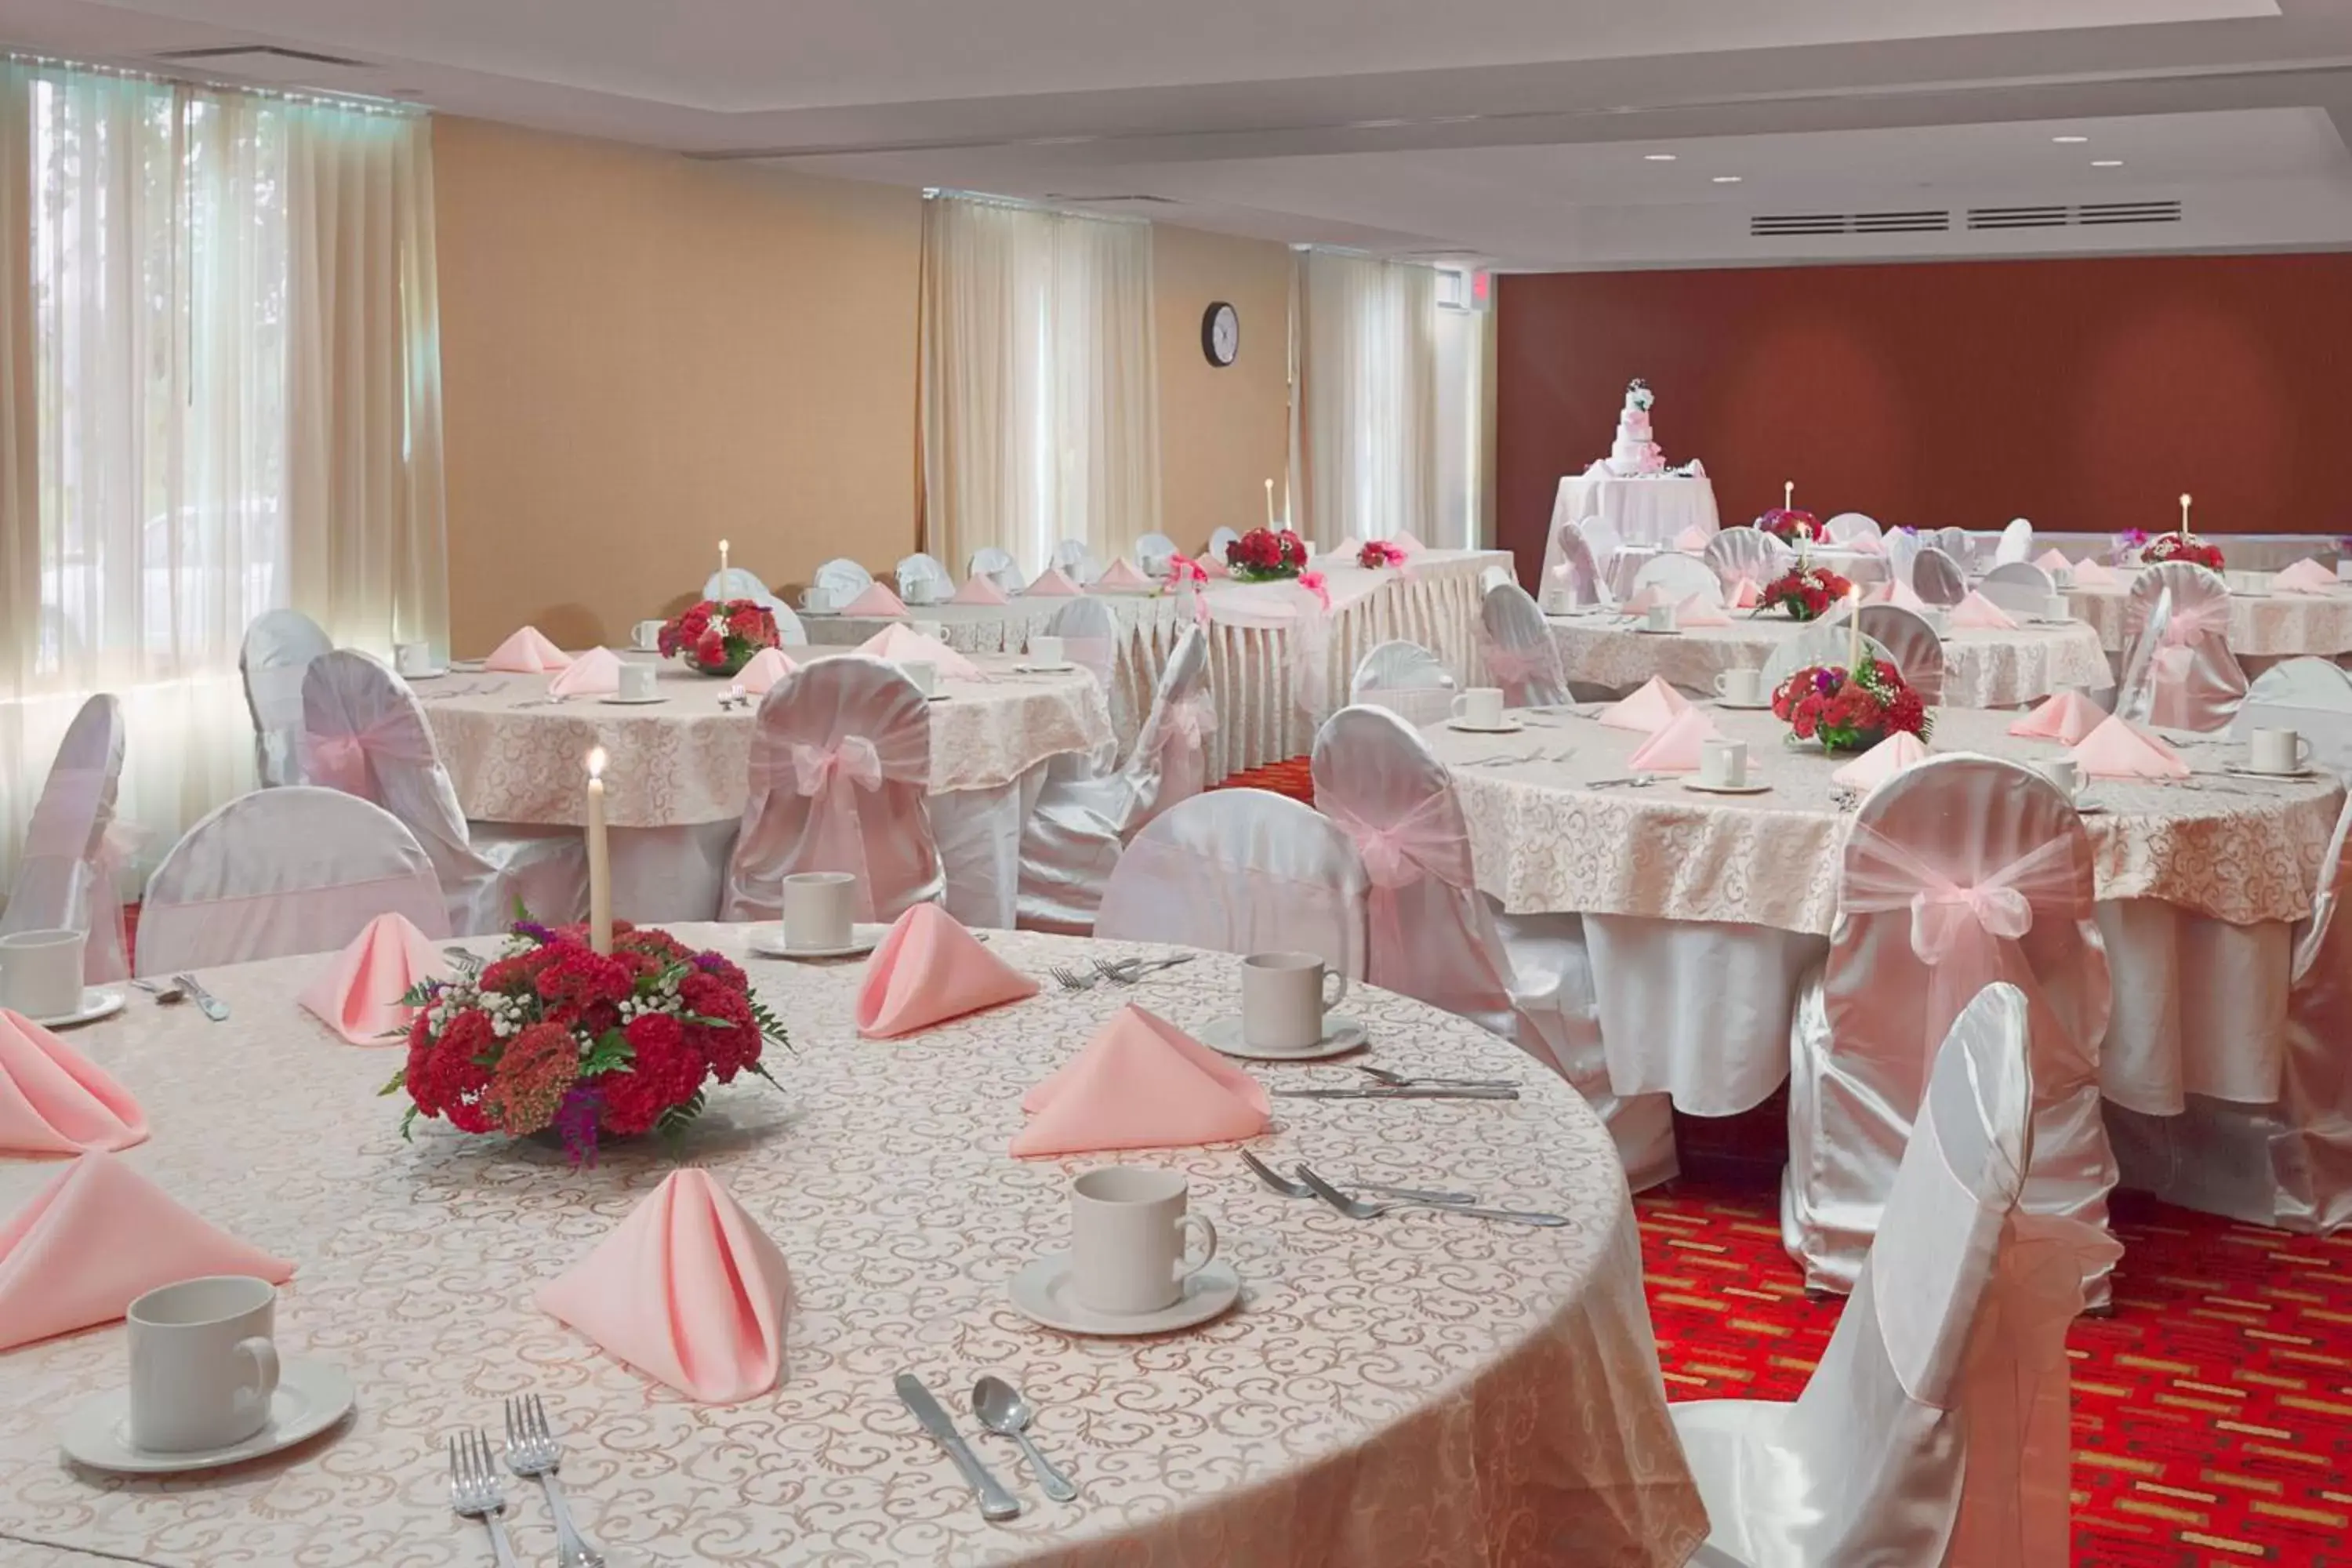 Banquet/Function facilities, Banquet Facilities in Courtyard by Marriott Harrisburg Hershey